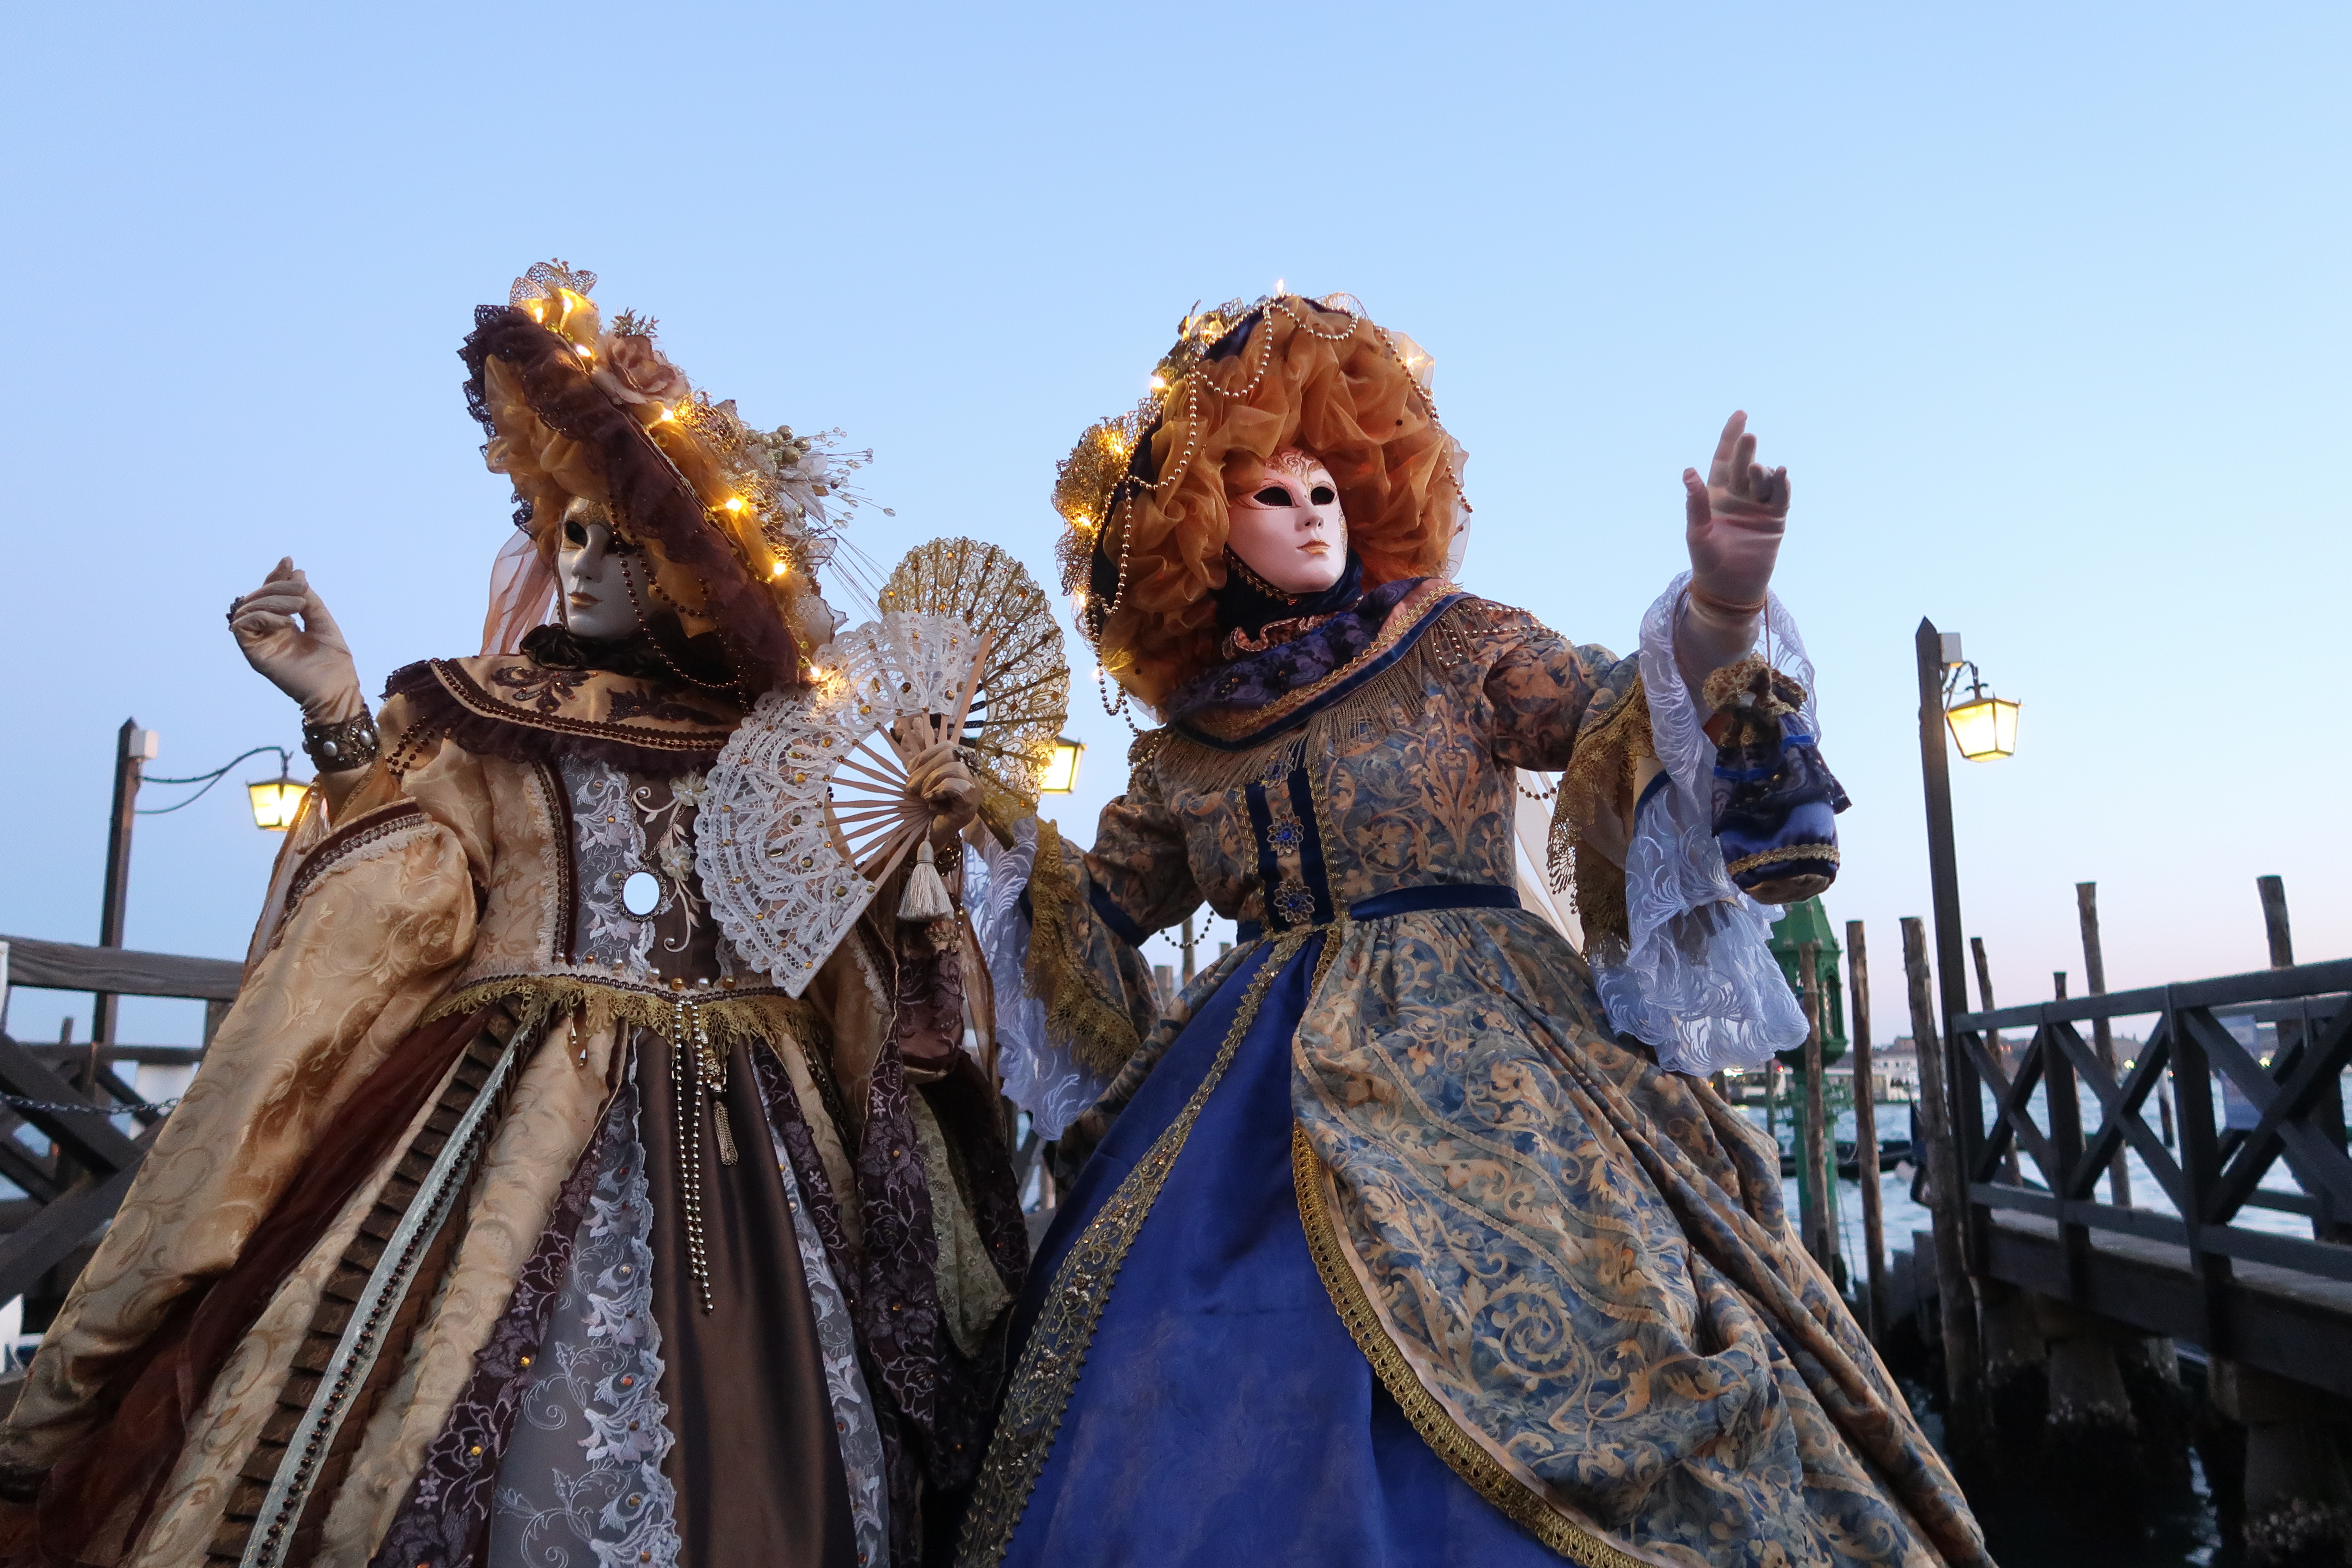 Photographs from Carnevale di Venezia 2017